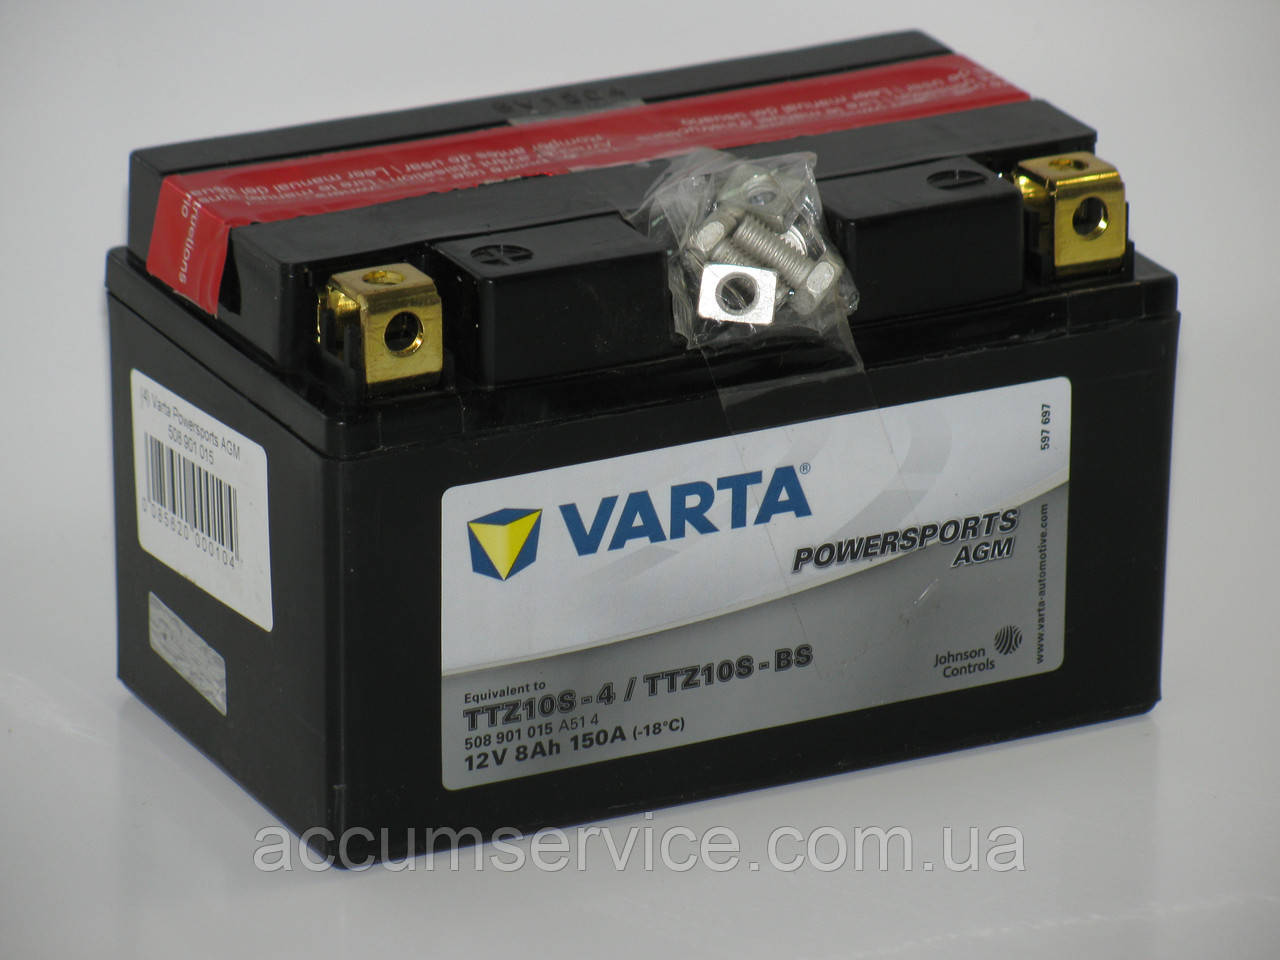 Акумулятор Varta Powersports AGM 508 901 015